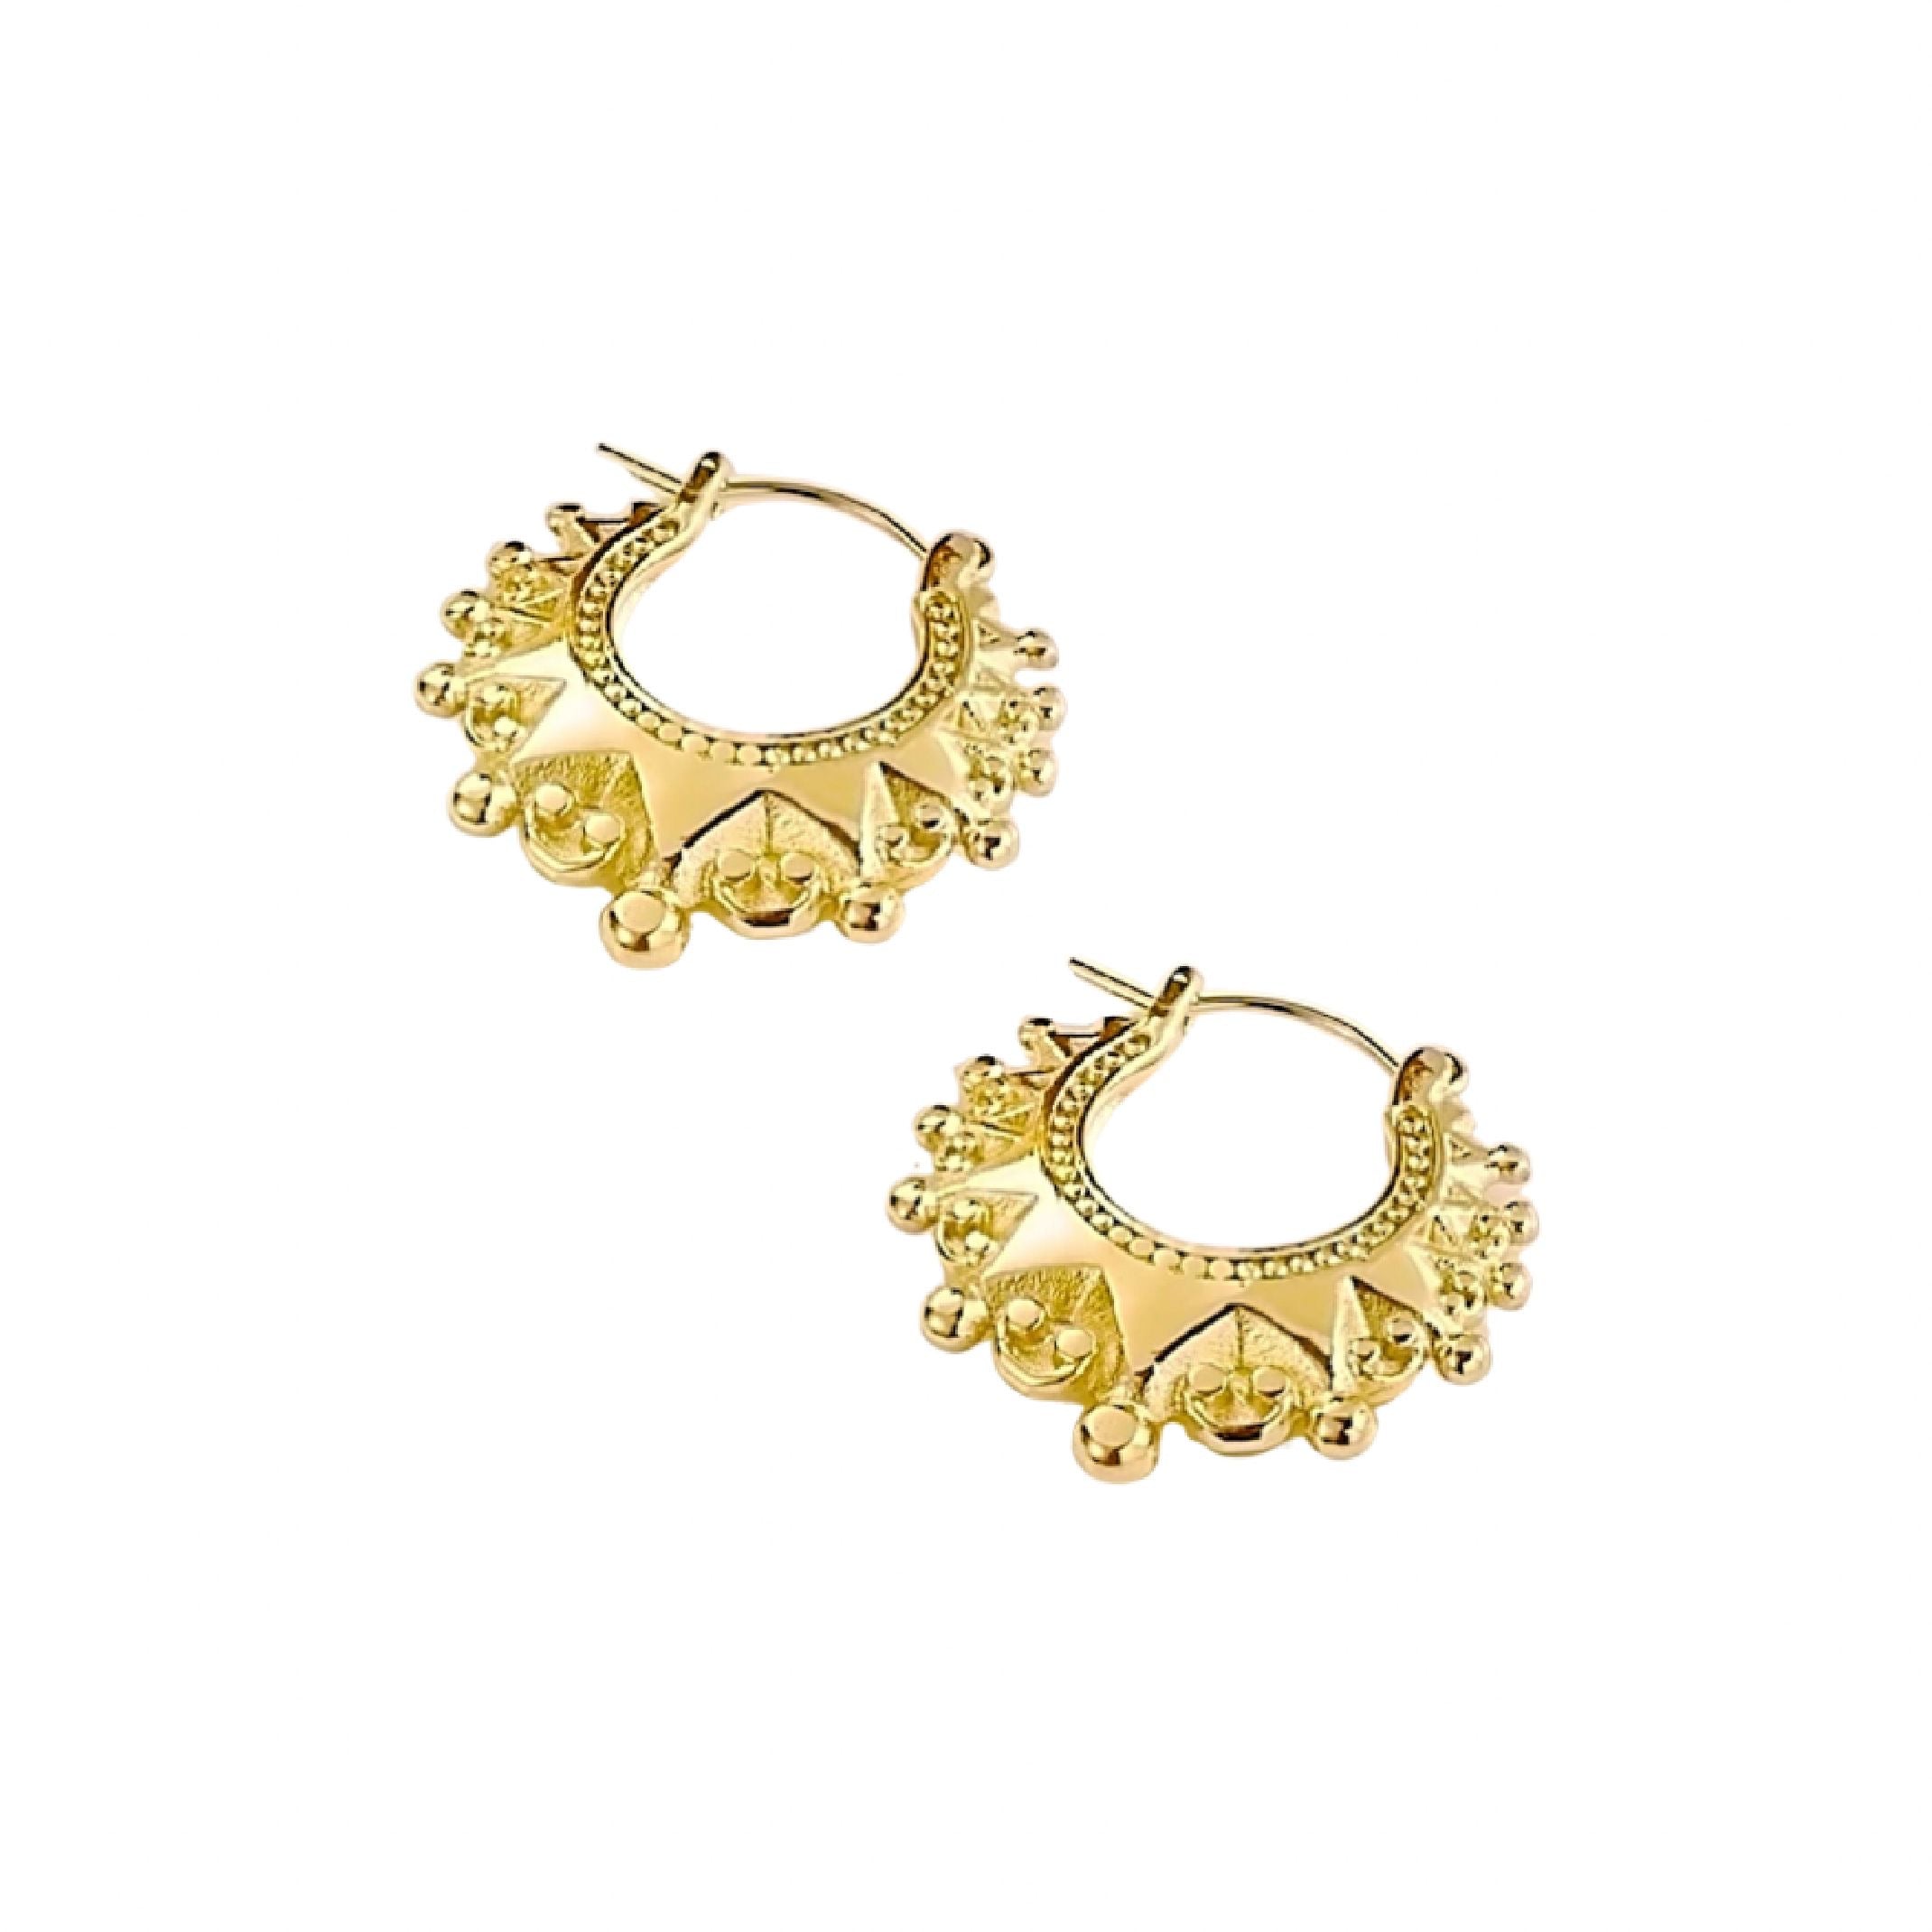 Gold creole earrings 